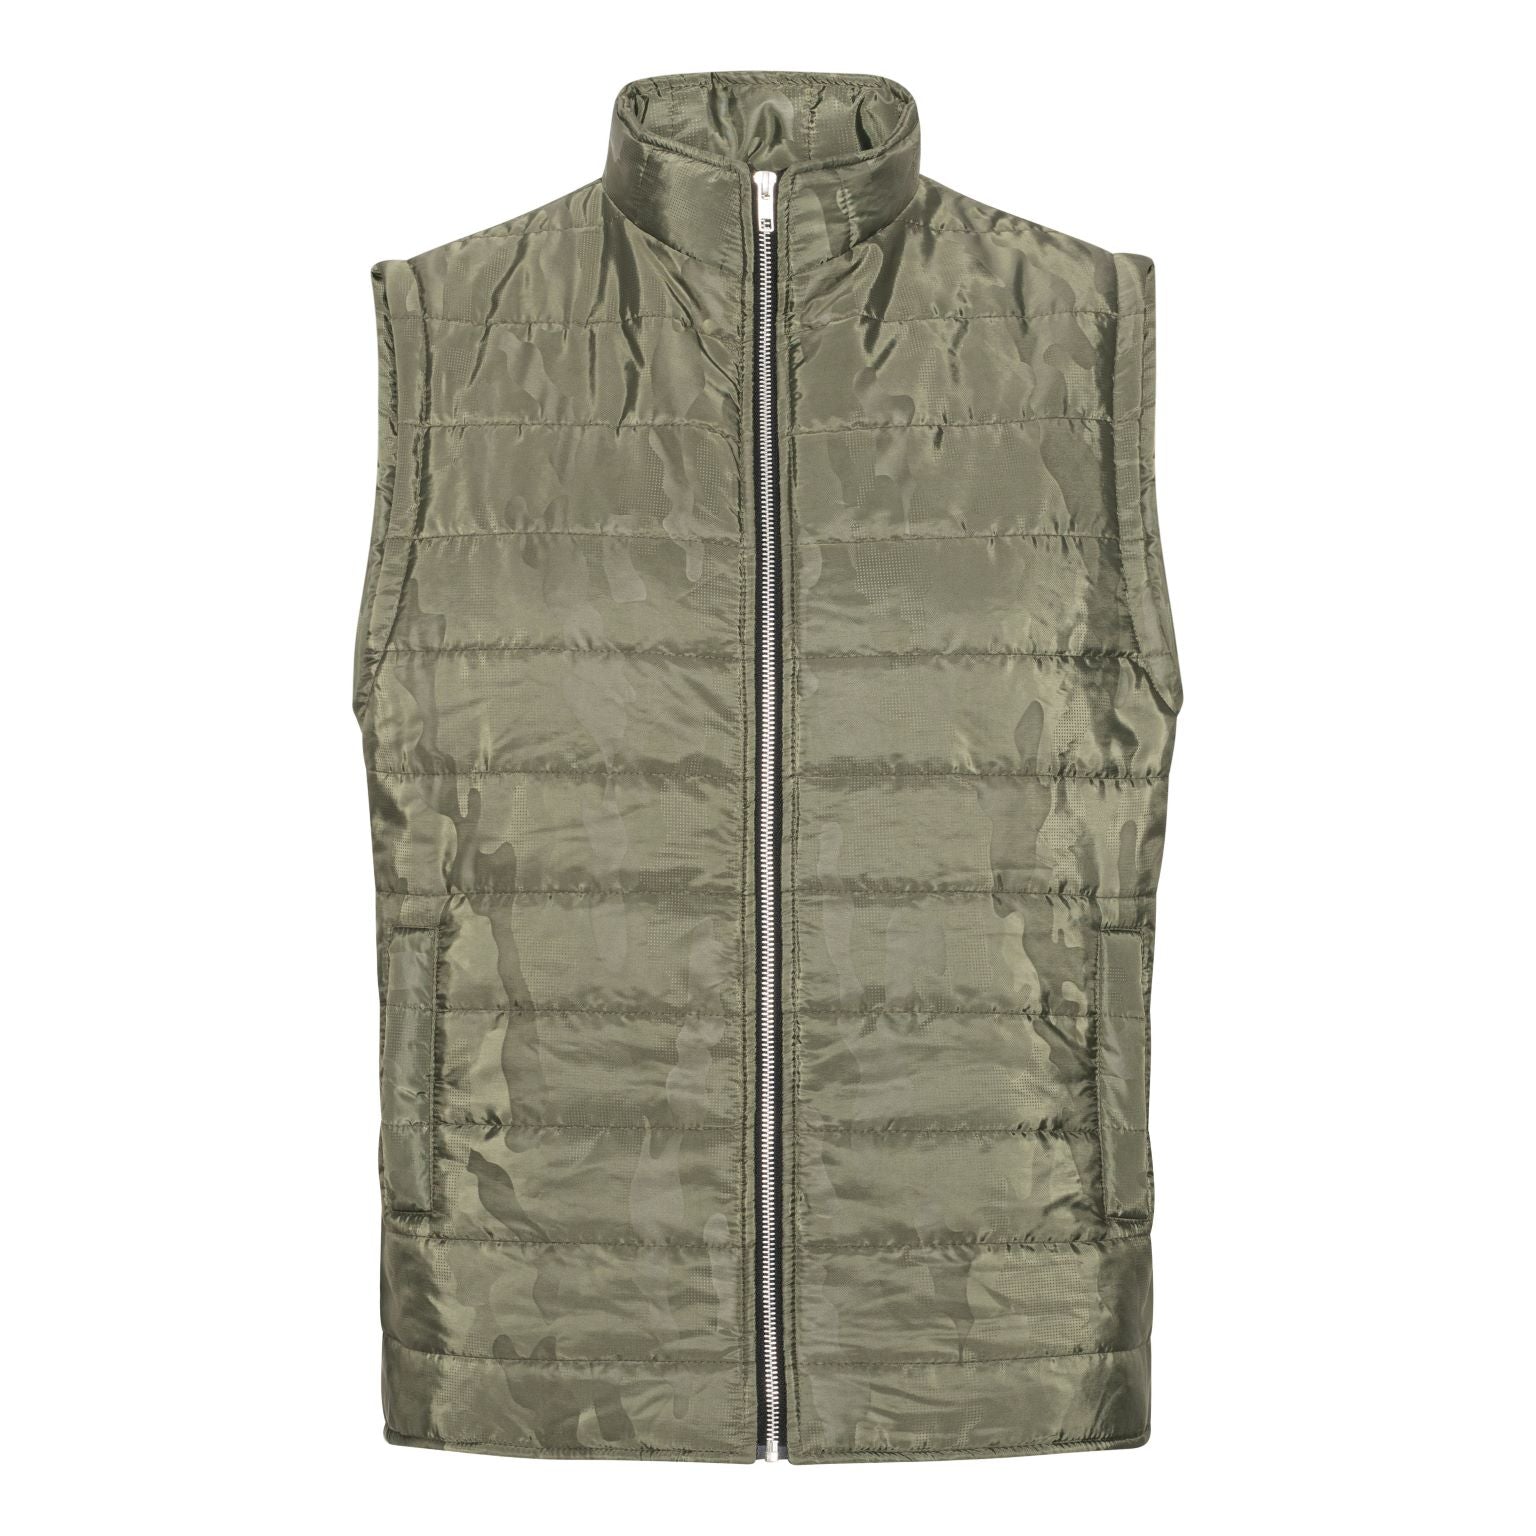 Army vest 